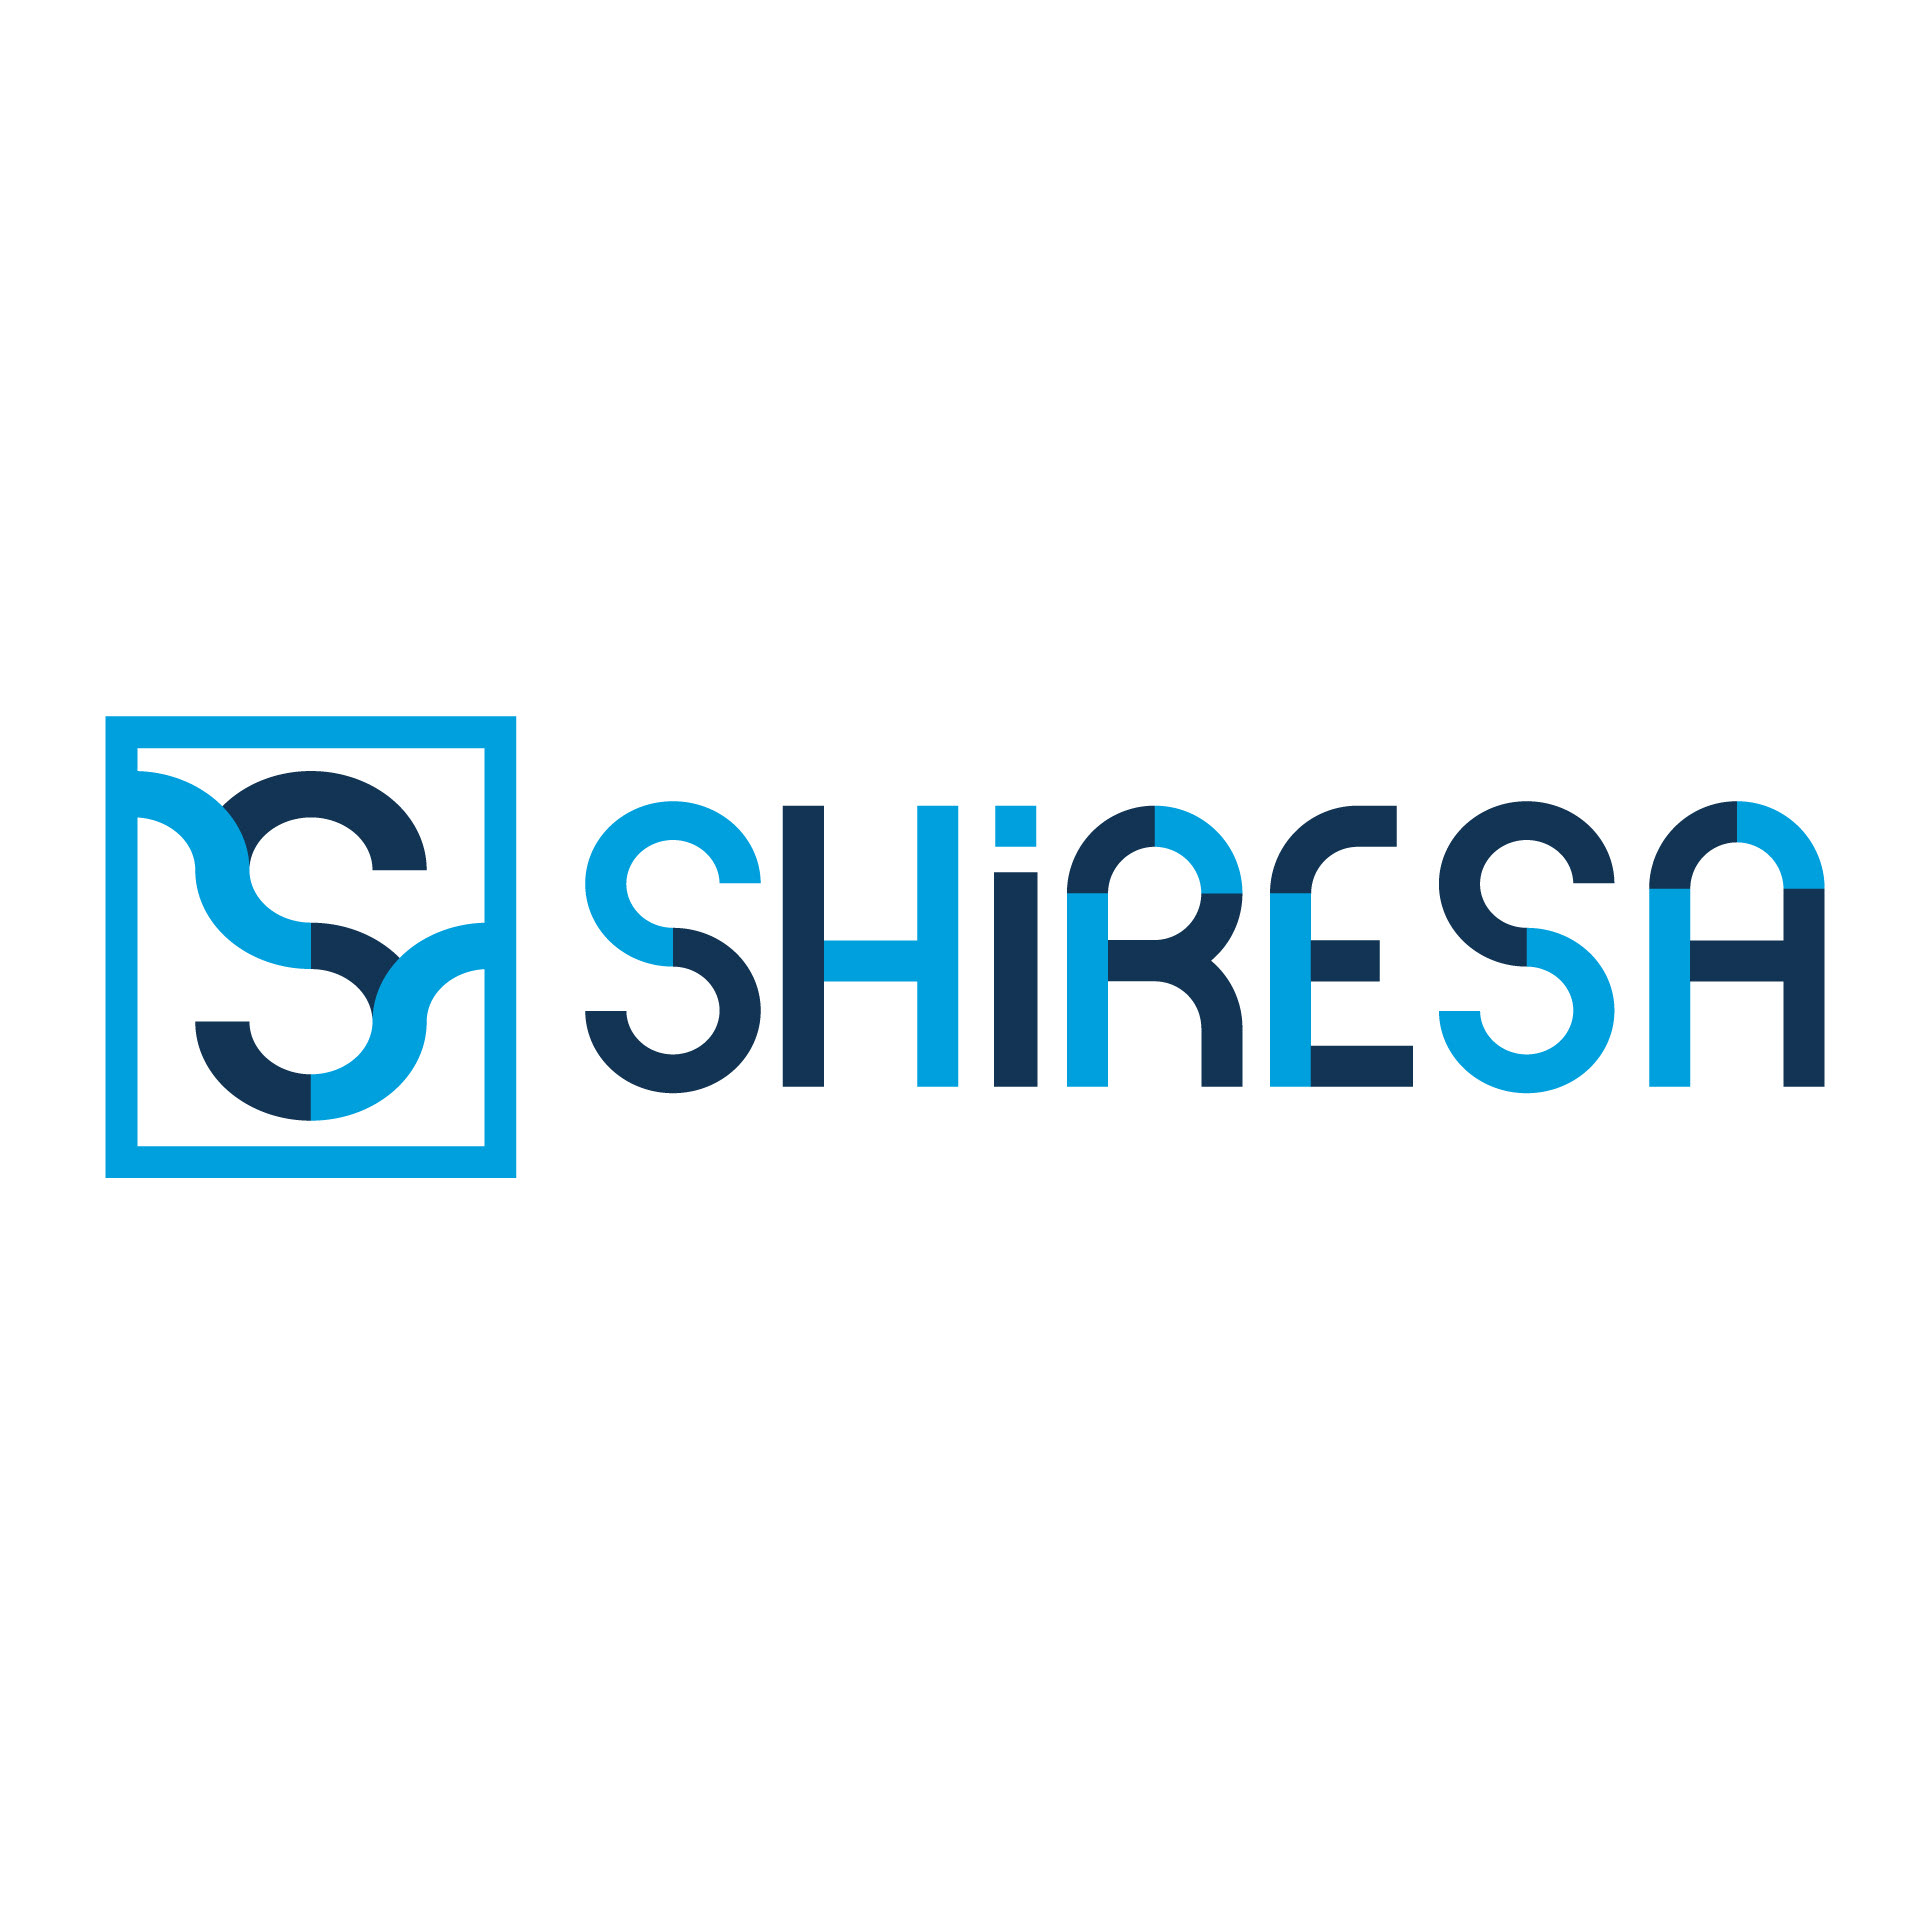 Logotipo para firma de consultoría Shiresa